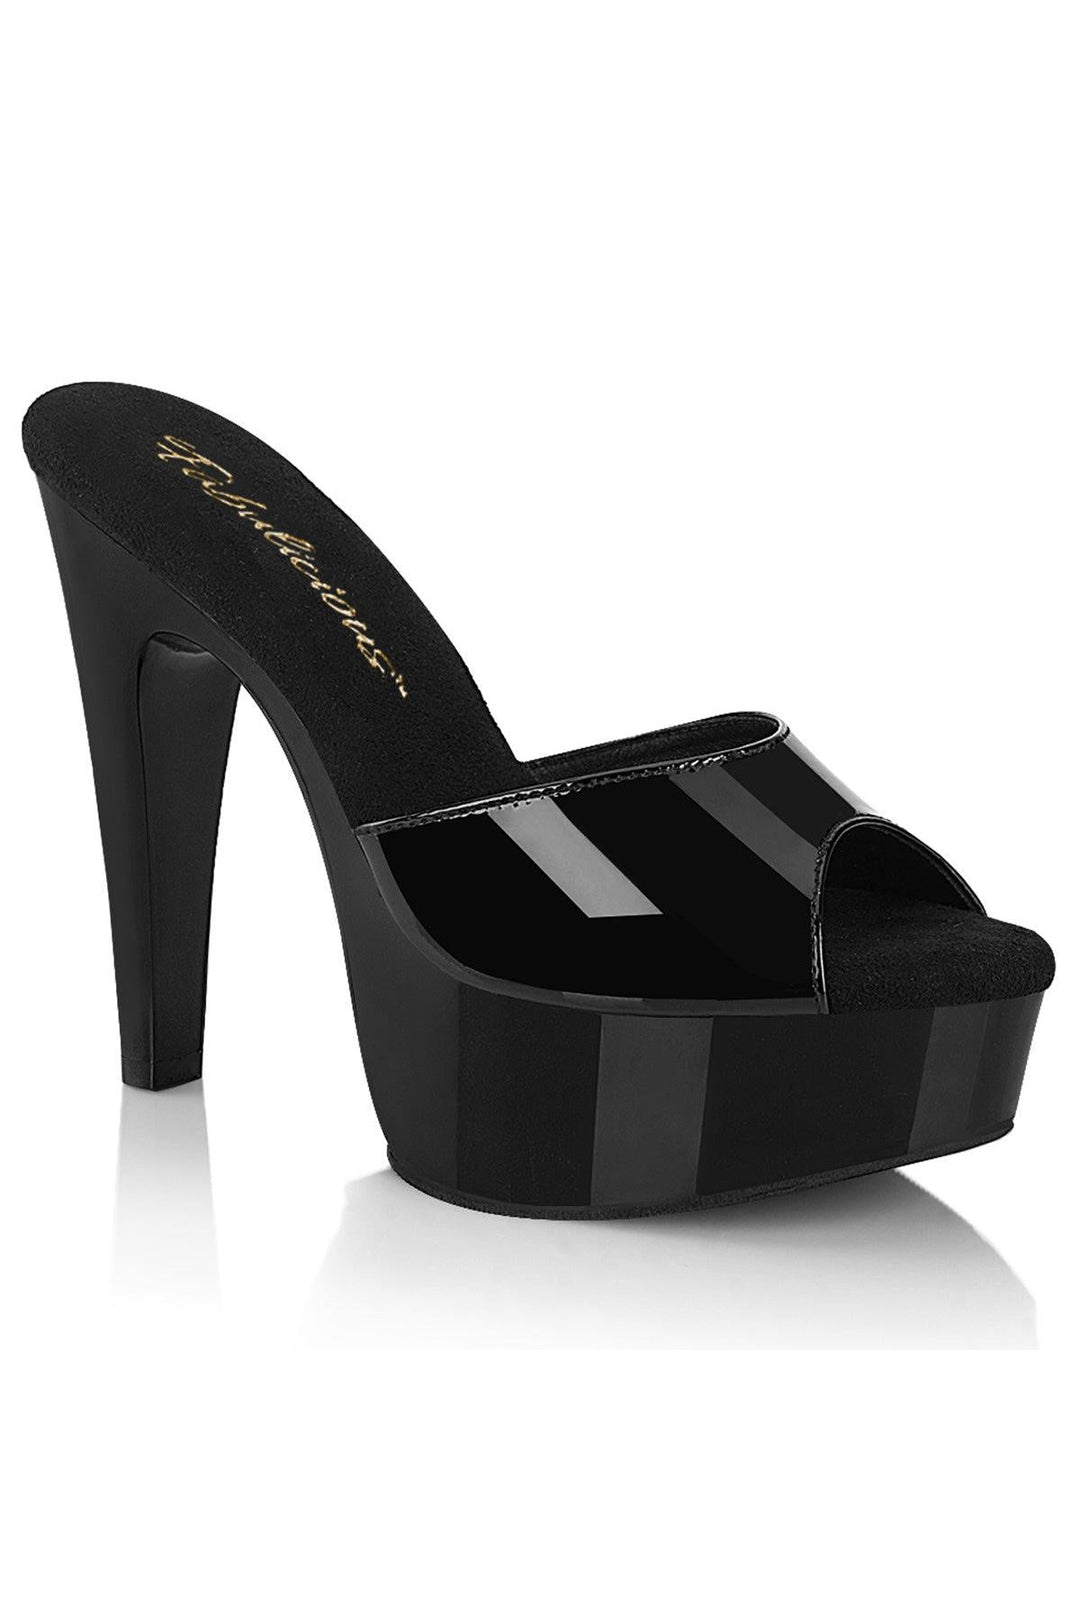 Fabulicious Black Slides Platform Stripper Shoes | Buy at Sexyshoes.com